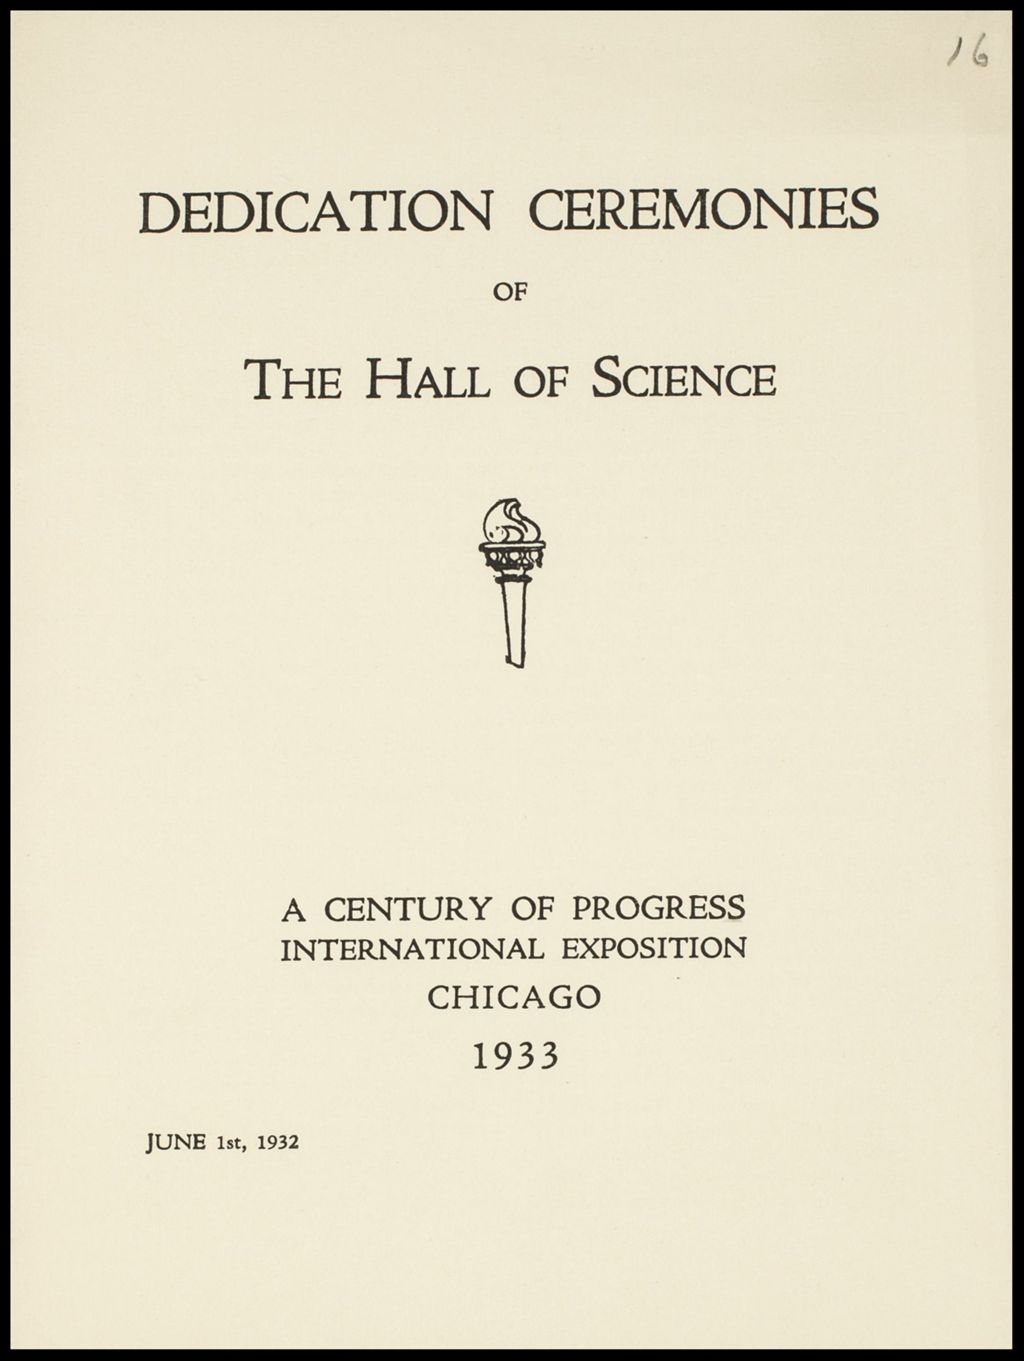 Dedication ceremonies of The Hall of Science (Folder 16-313)